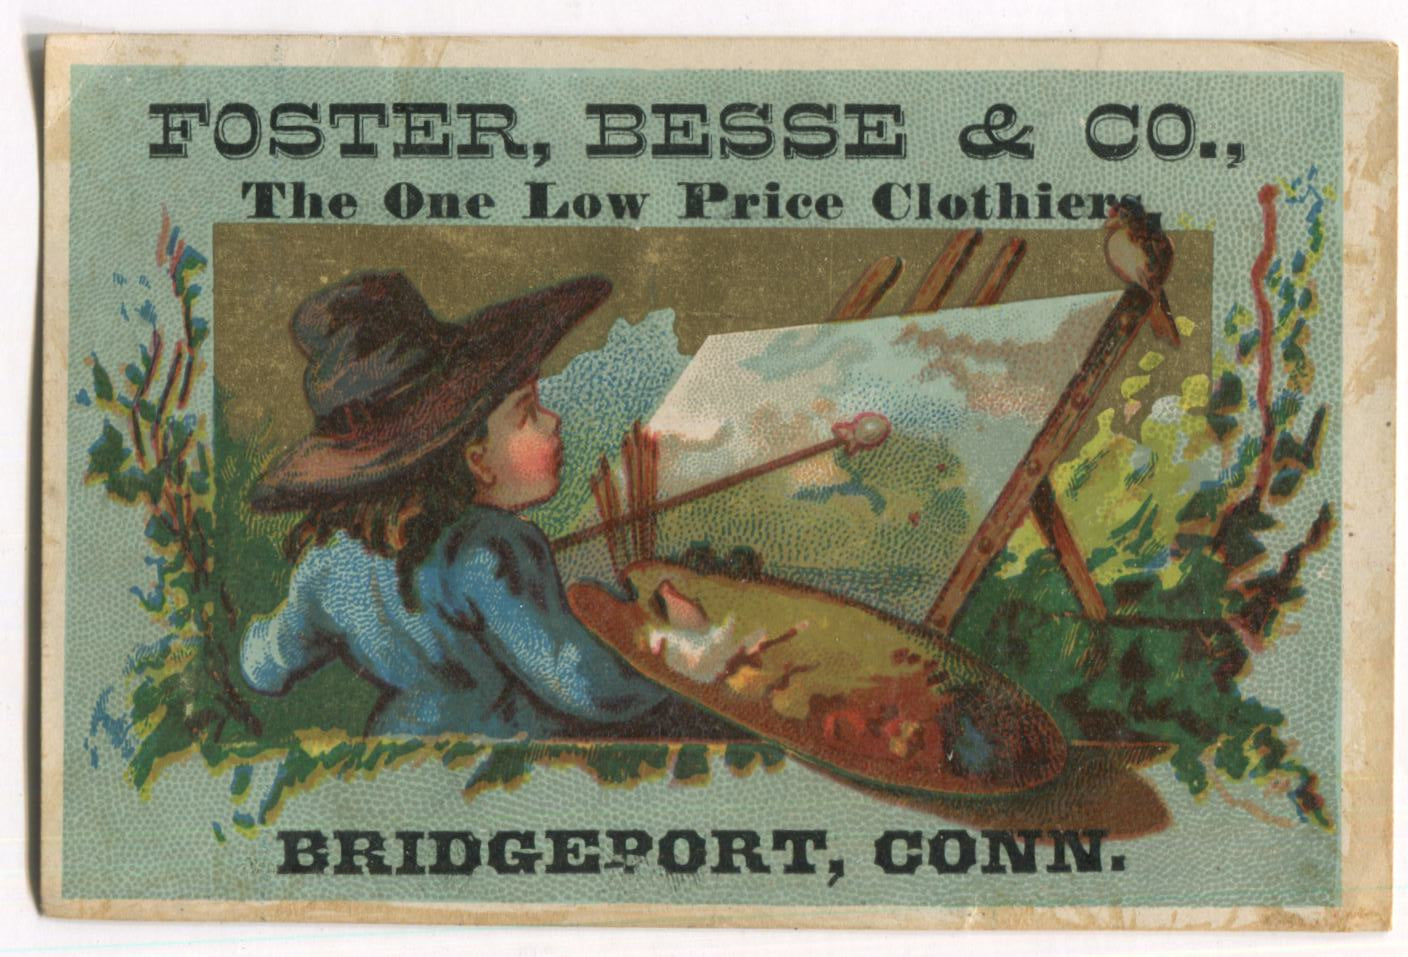 Foster, Besse, & Co. Clothiers, Bridgeport, CT Antique Trade Card - 4.5" x 3"